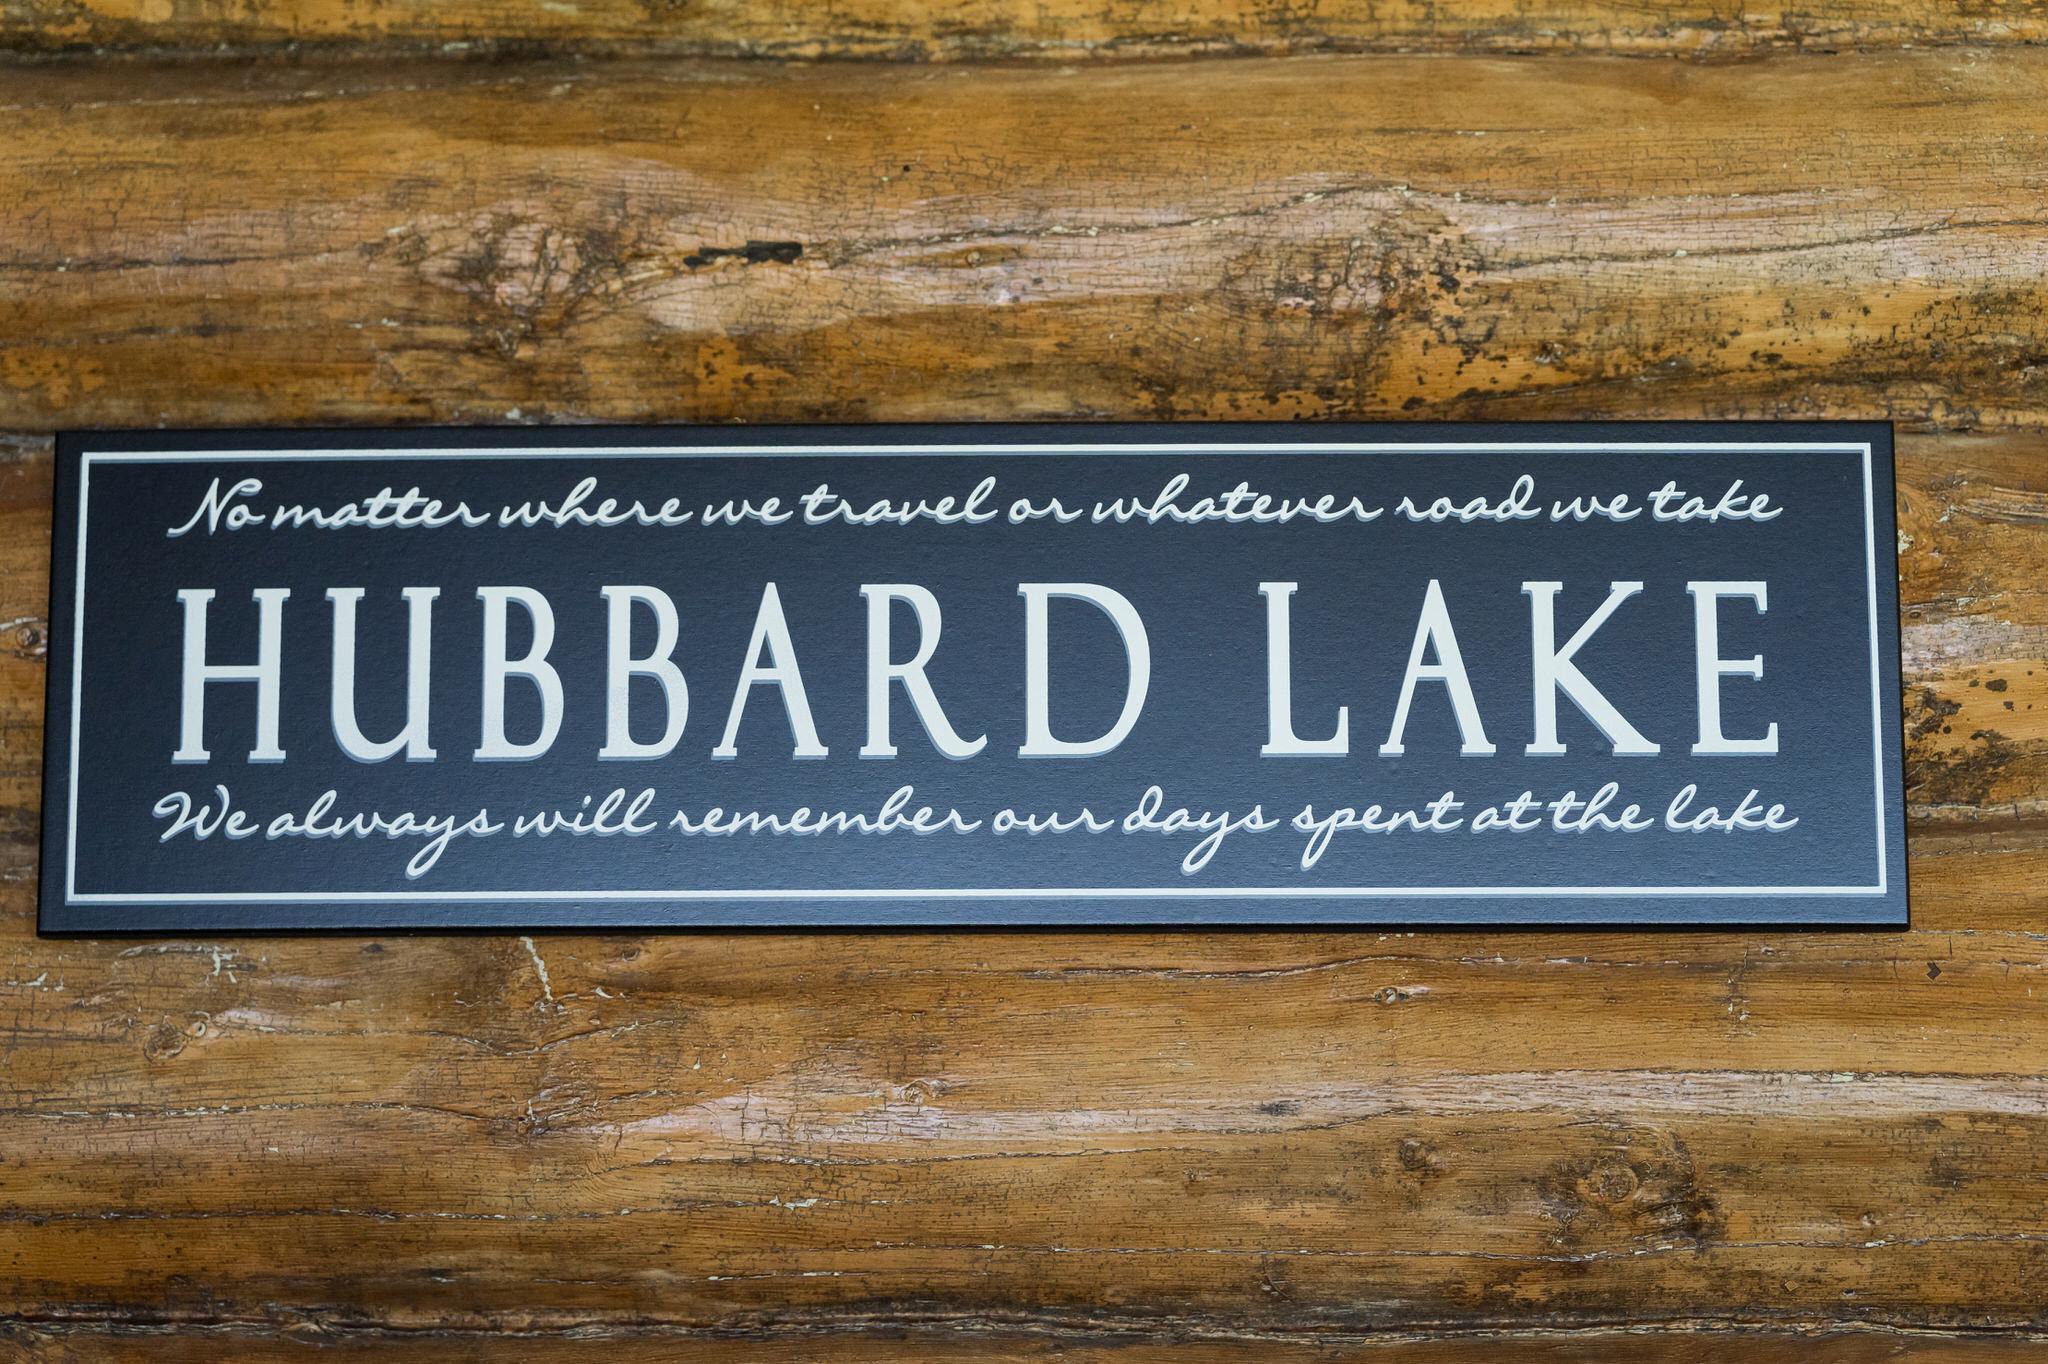 Hubbard lake sign